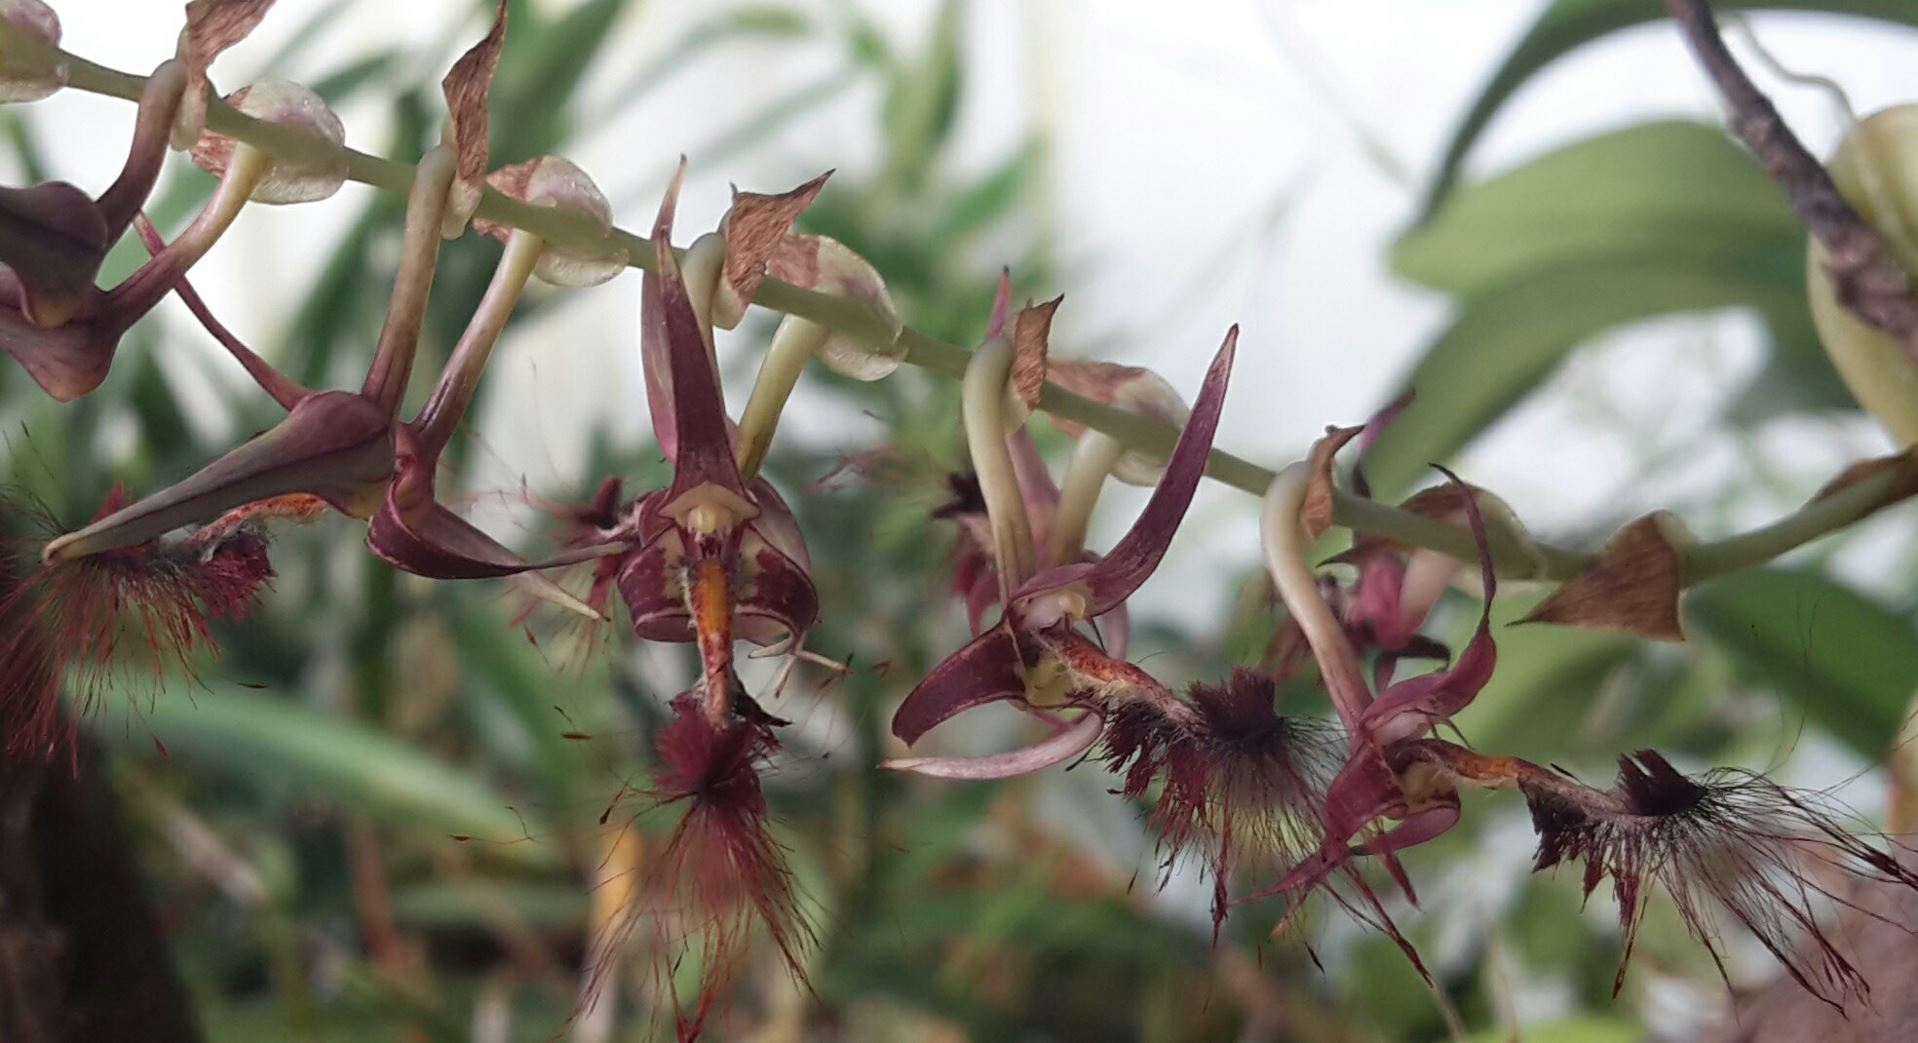 Bulbophyllum barbigerum - Bearded bulbophyllum